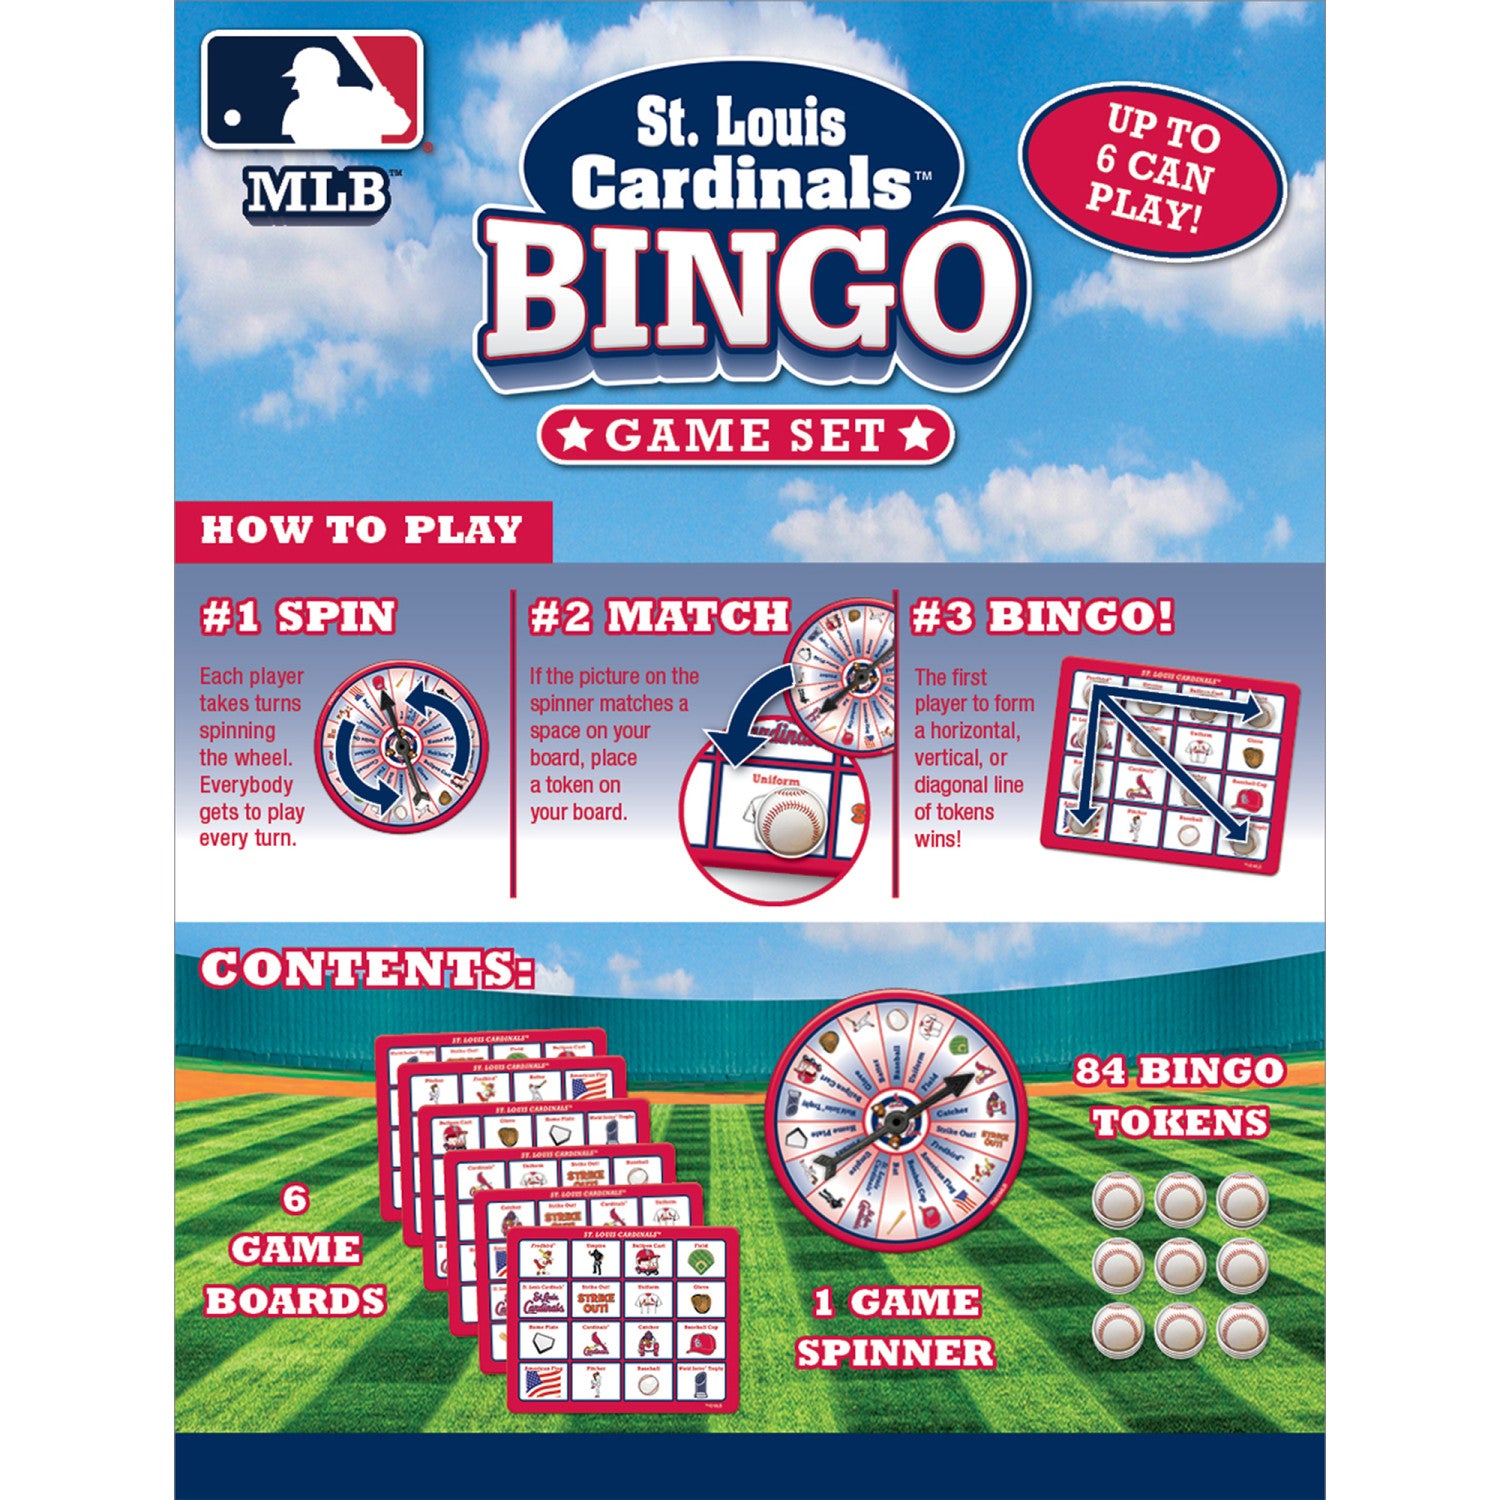 St. Louis Cardinals Bingo Game